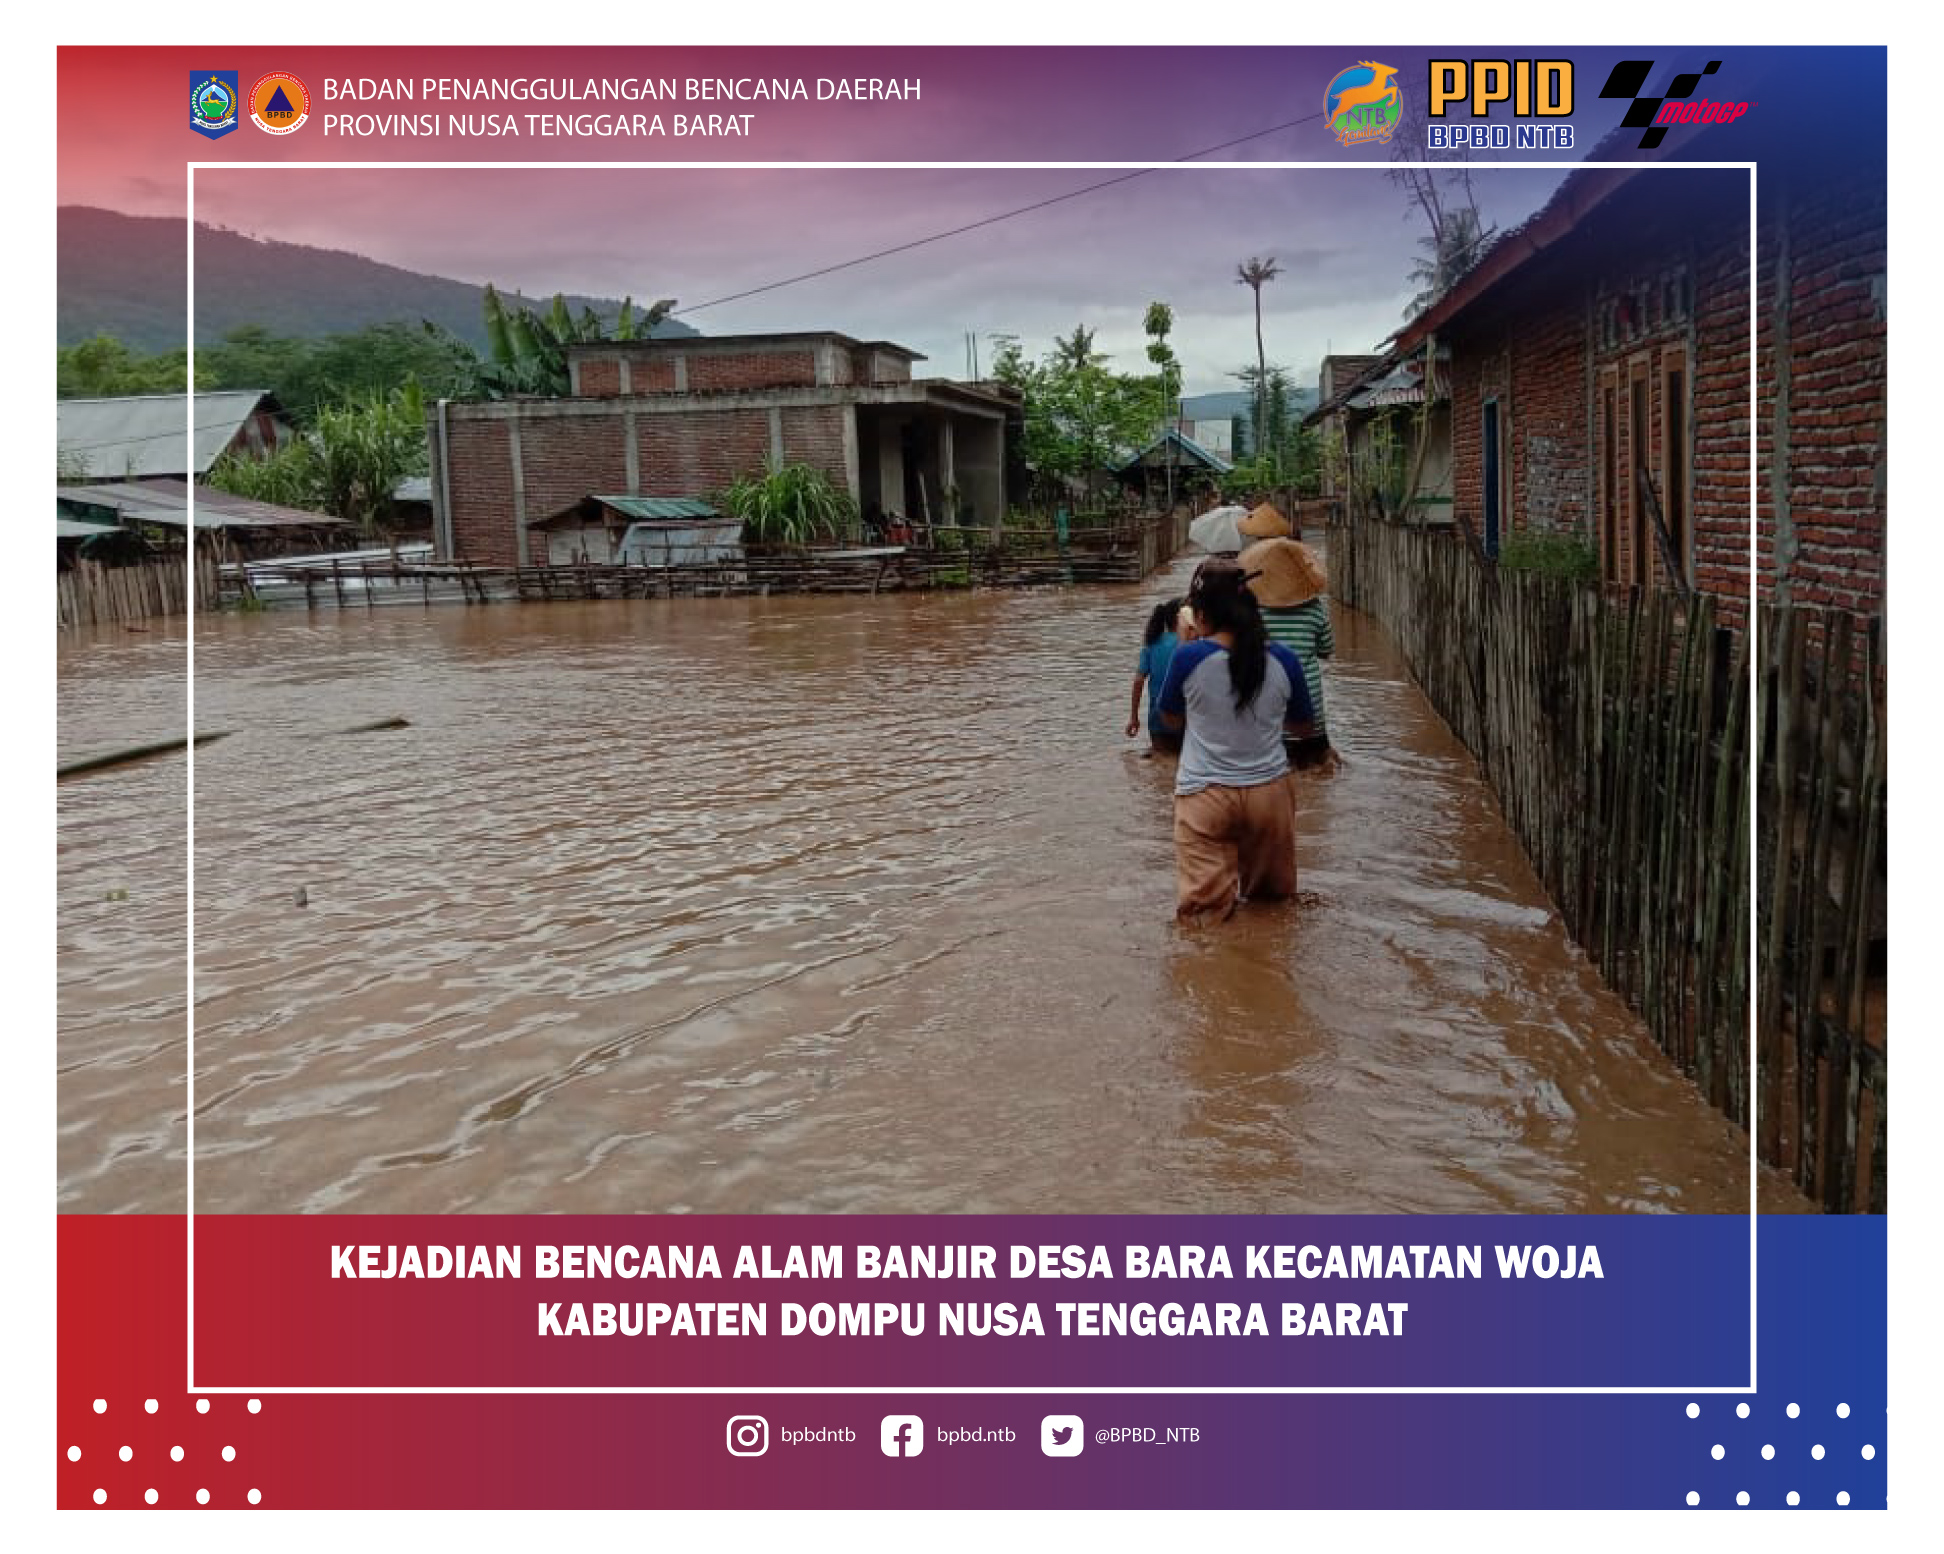 Laporan Kejadian Bencana Banjir Desa Bara Kecamatan Woja Kabupaten Dompu (Senin, 13 Desember 2021)